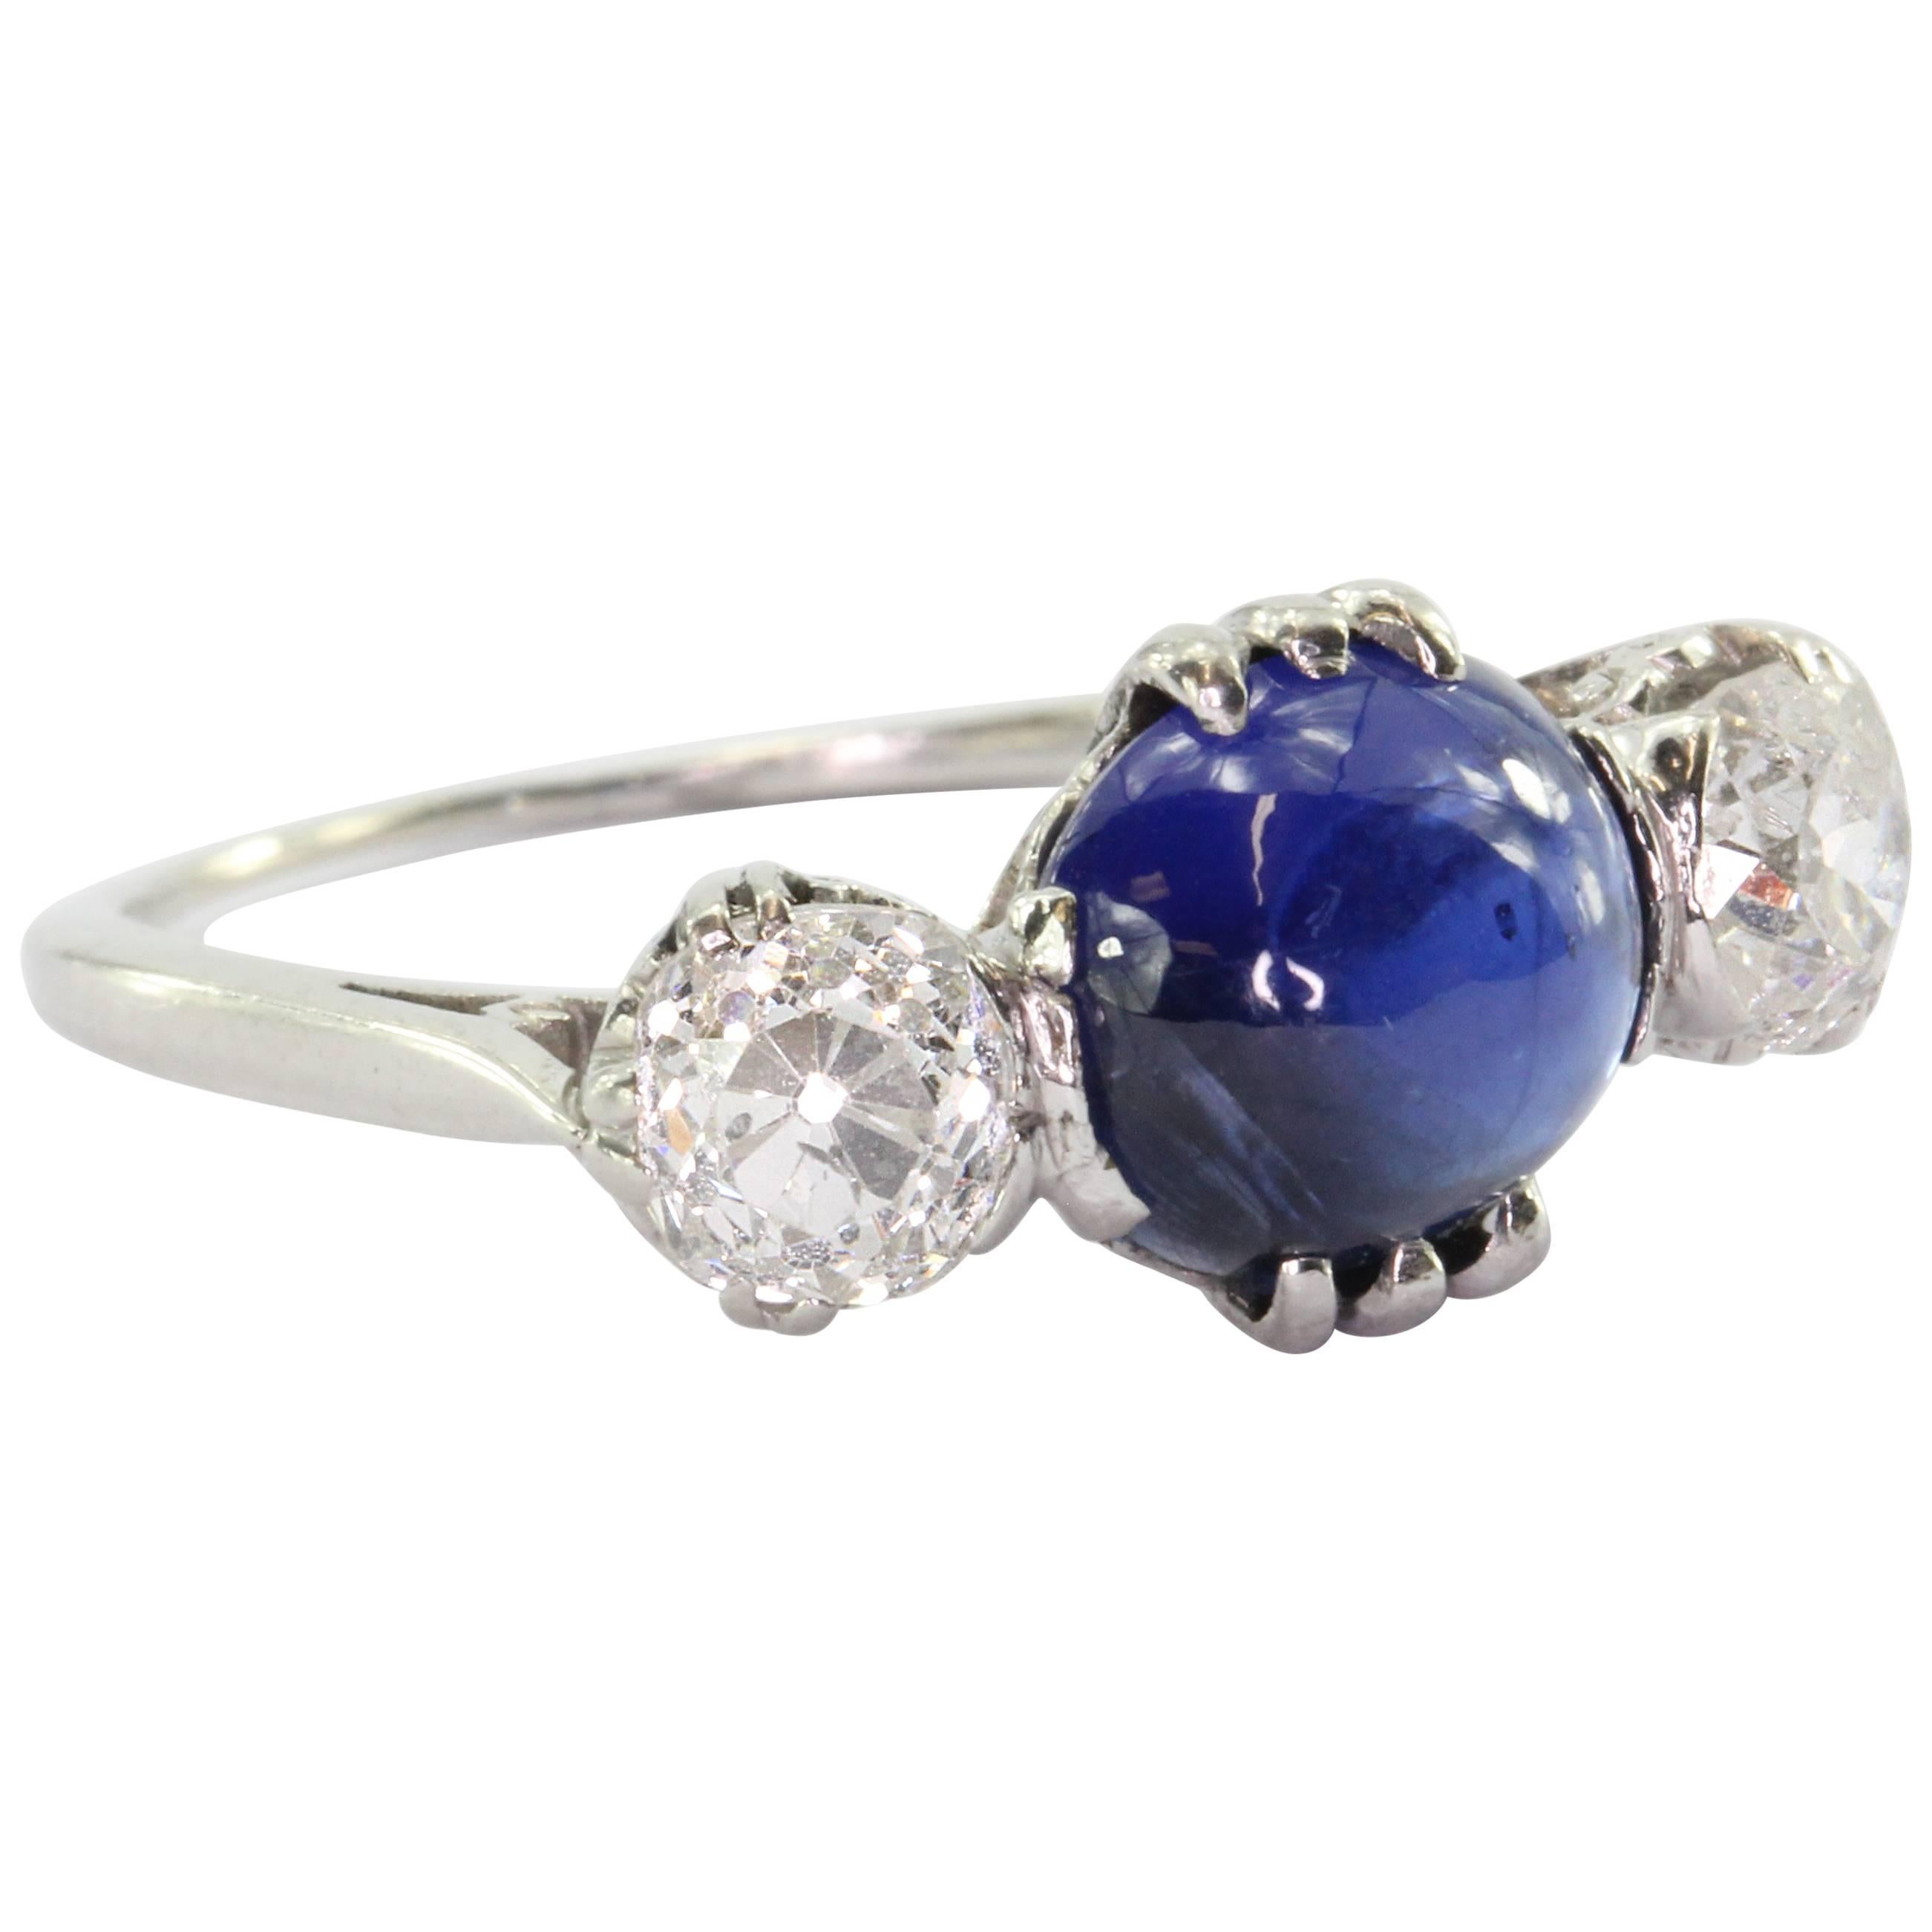 Edwardian Natural No Heat Burma Blue Sapphire Platinum Diamond Ring